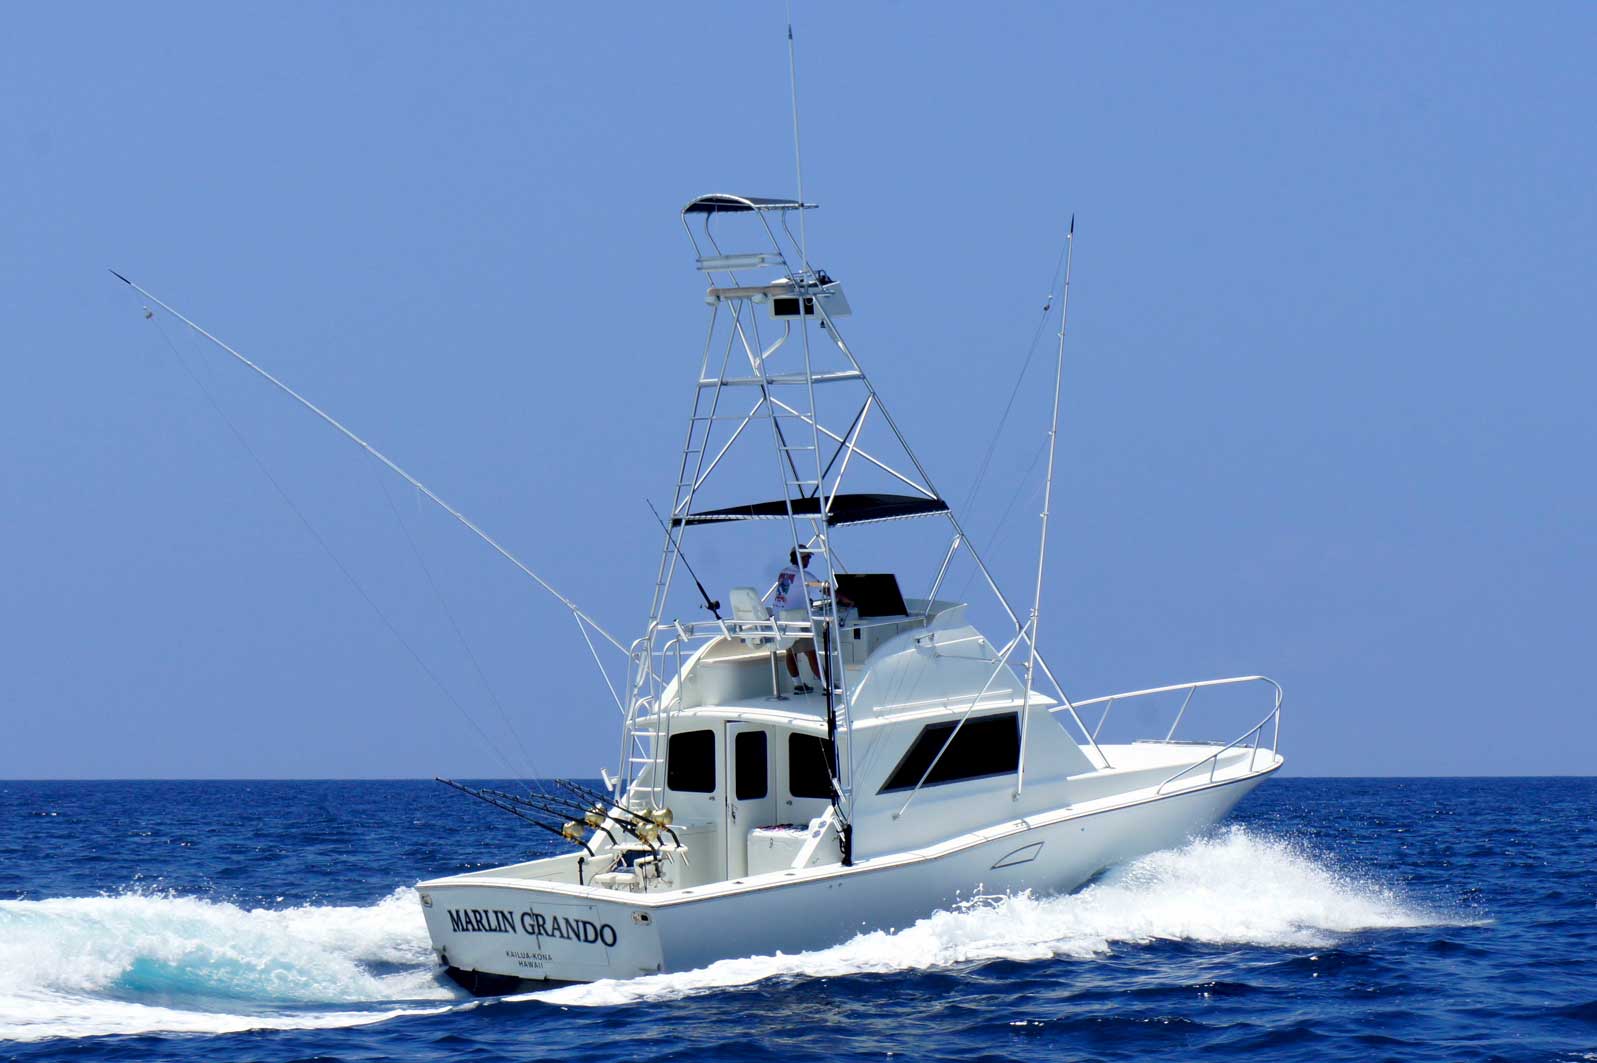 Marlin Grando Family Fishing Charter Boat in Kona